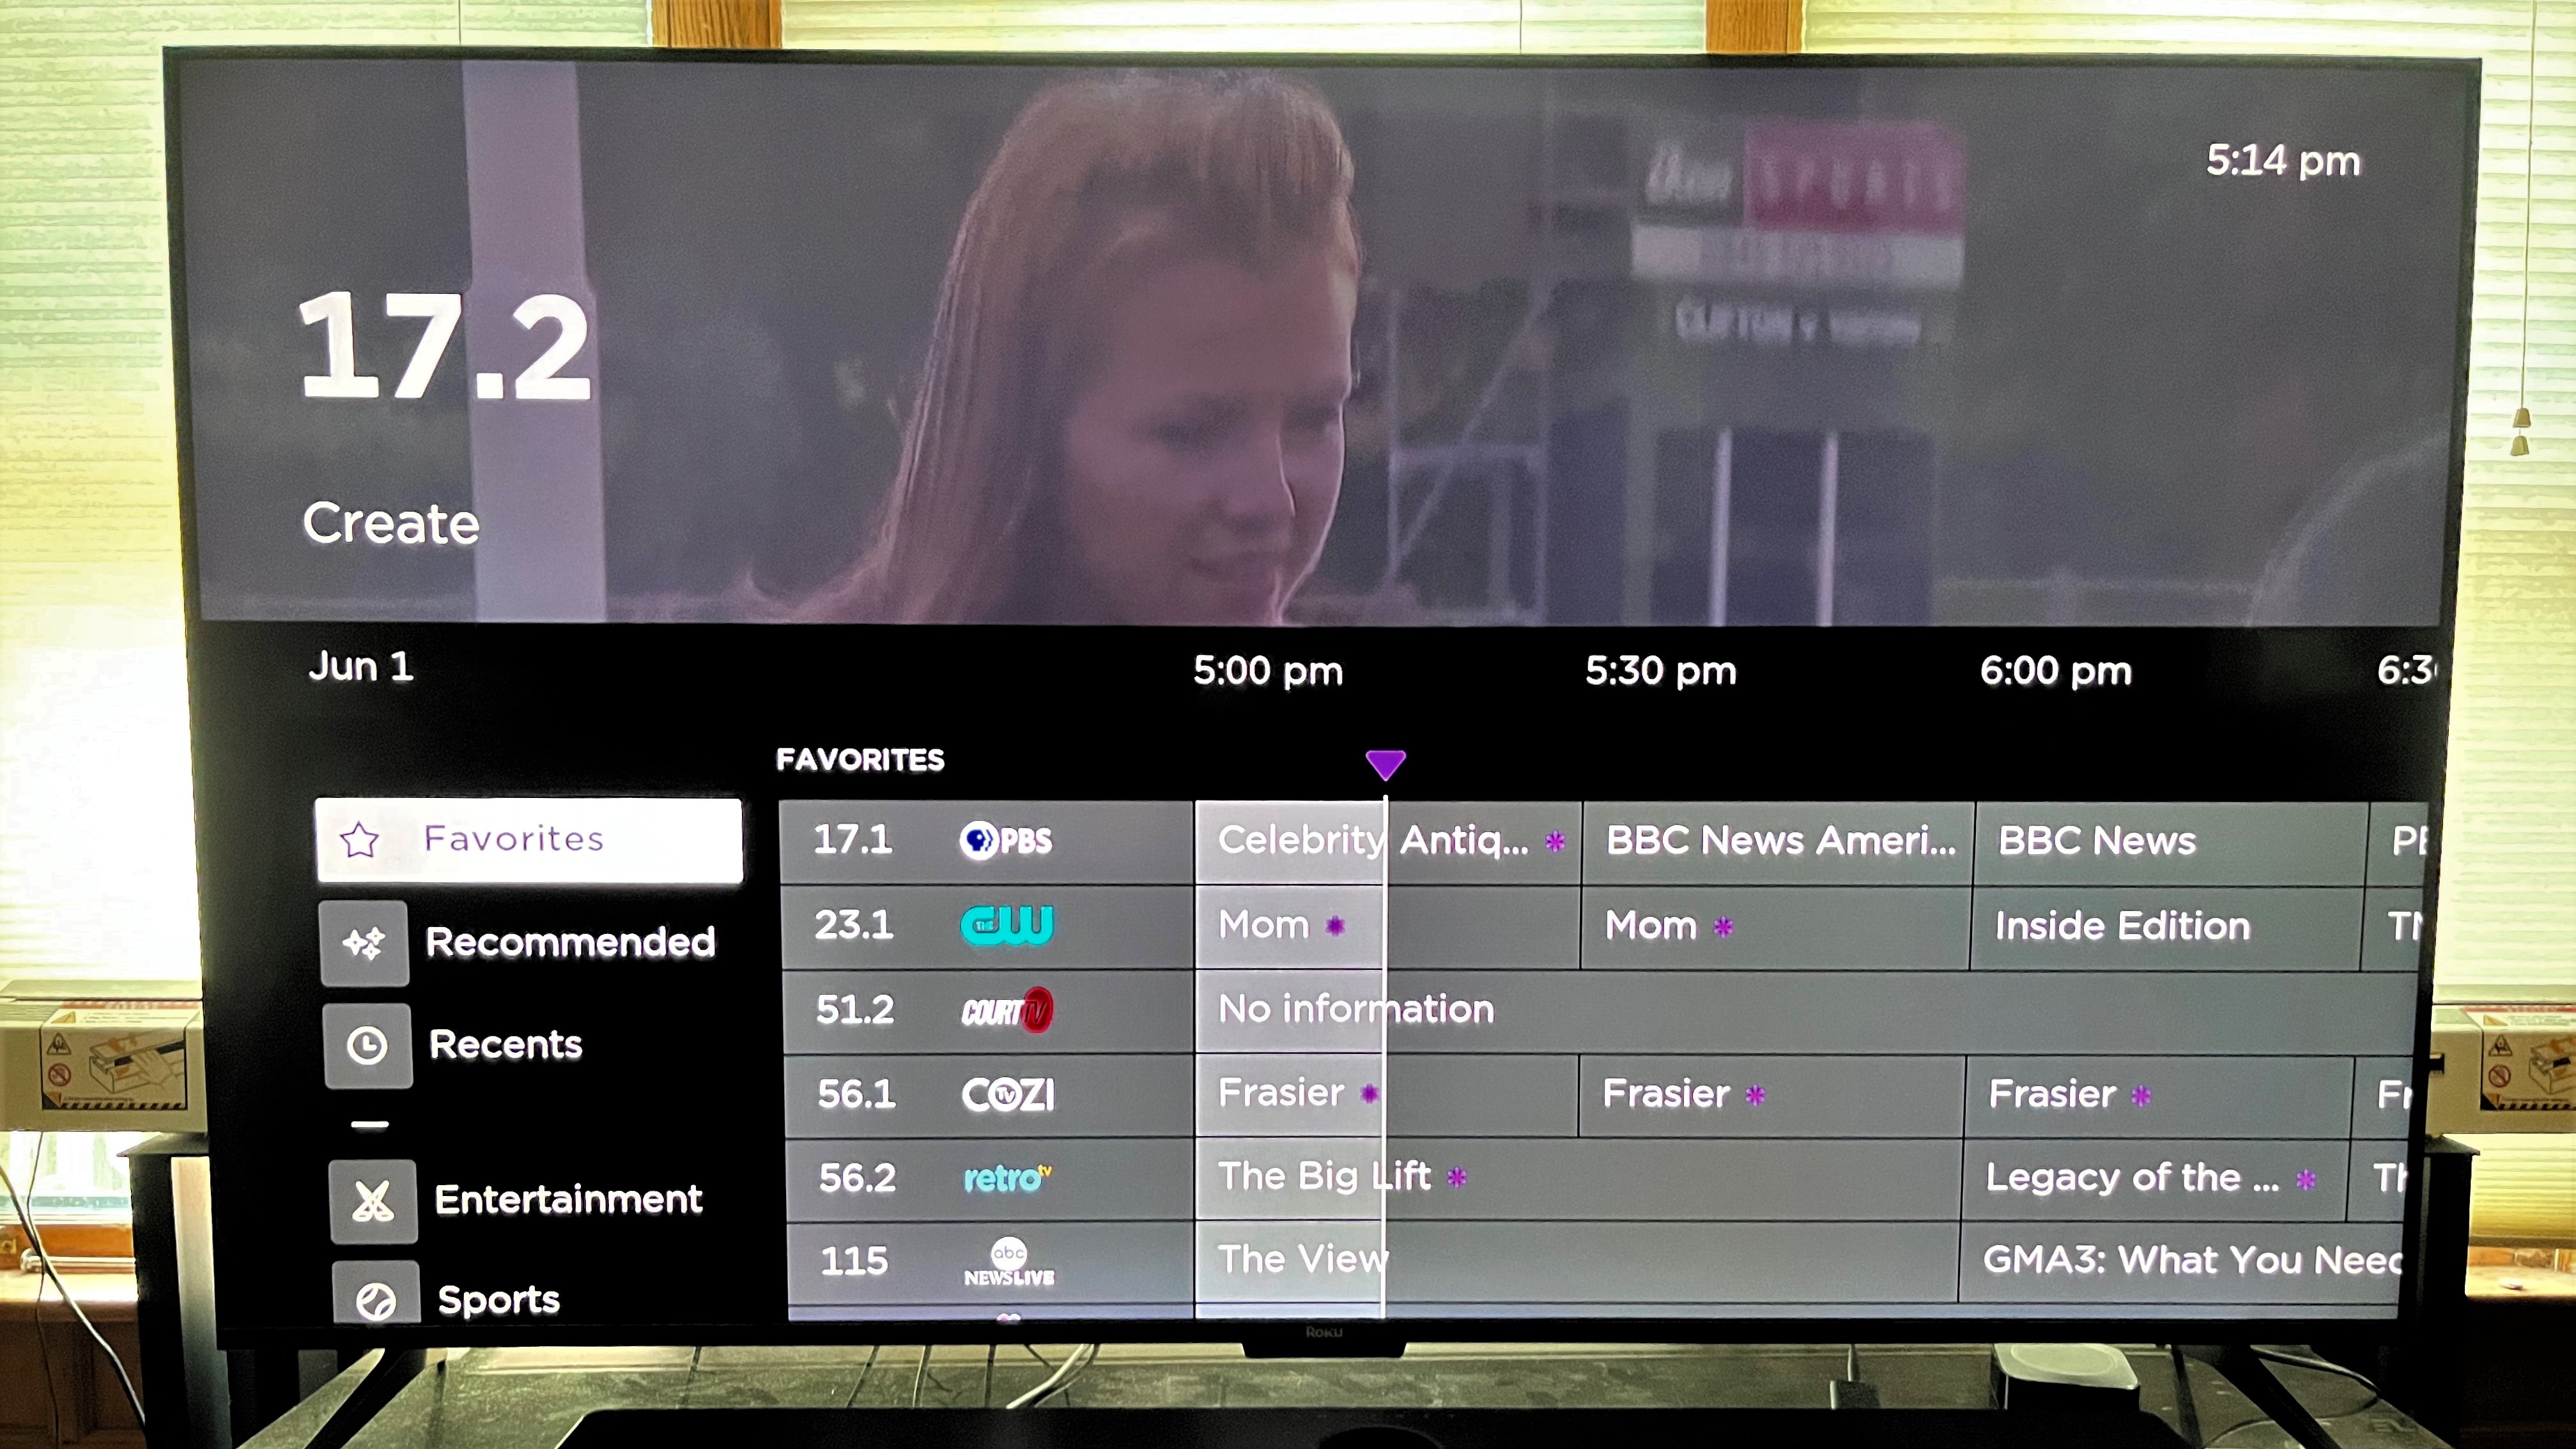 Roku Plus Series TV Live TV program guide shown onscreen